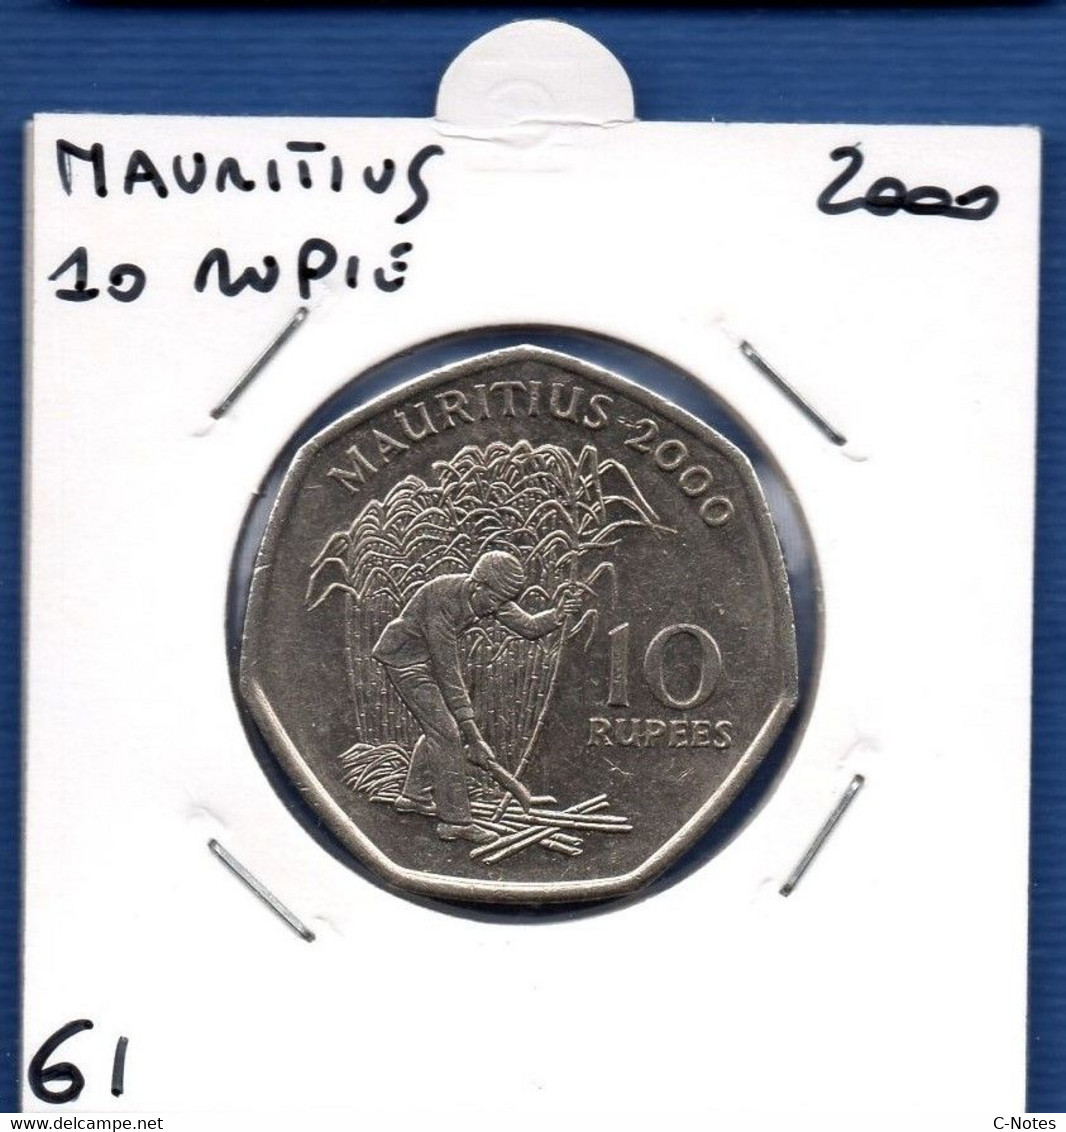 MAURITIUS - 10 Rupees 2000 -  See Photos -  Km 61 - Maurice